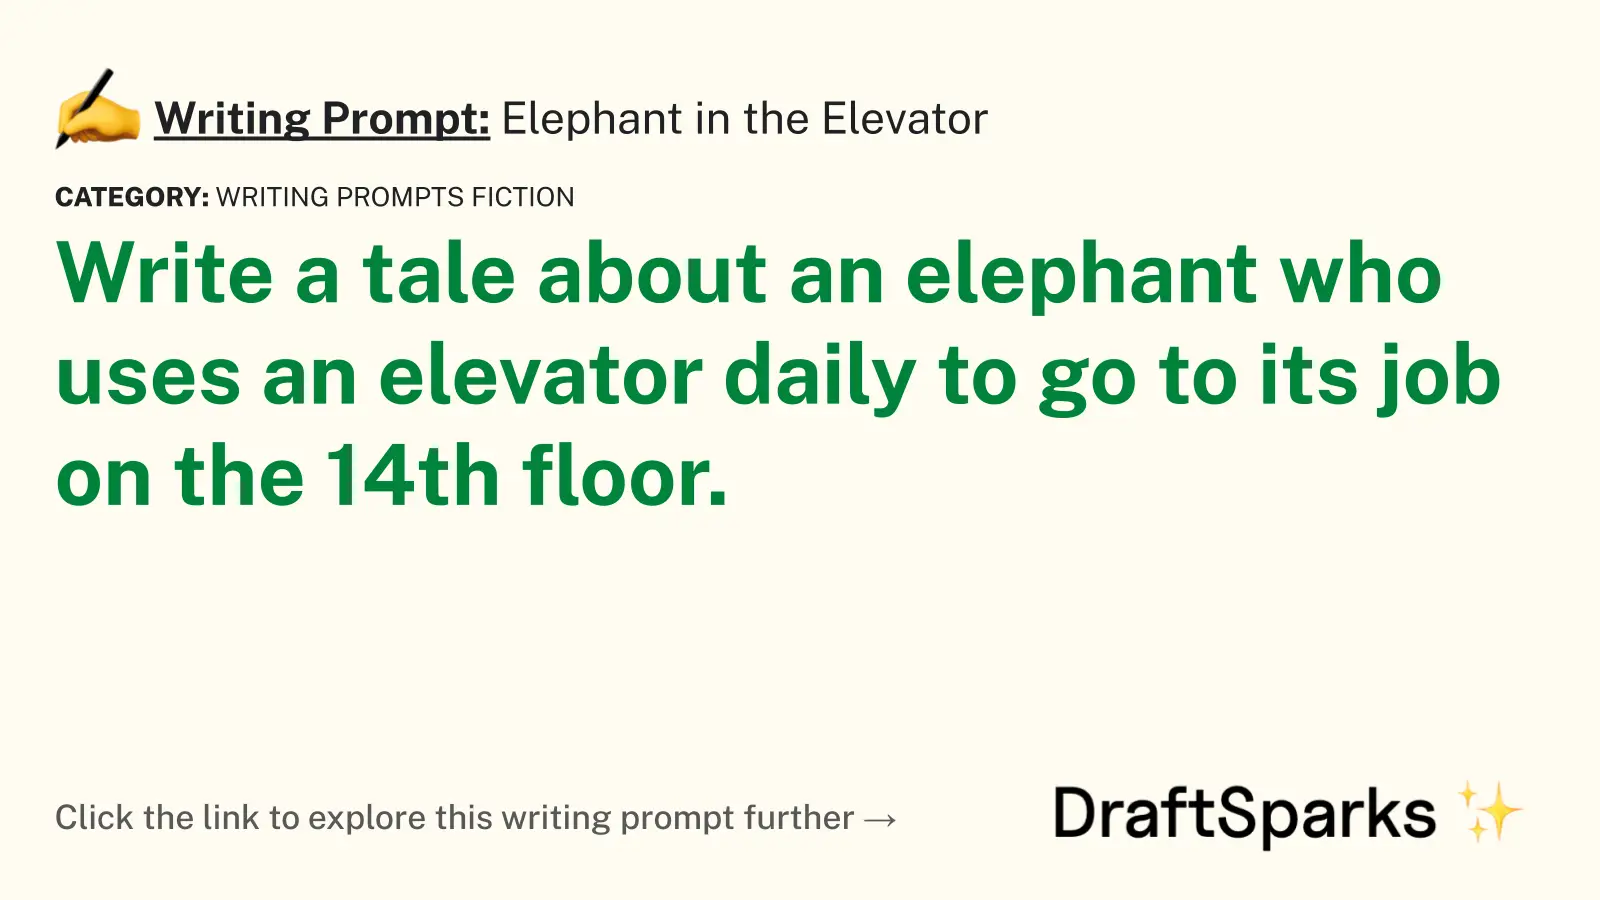 Elephant in the Elevator